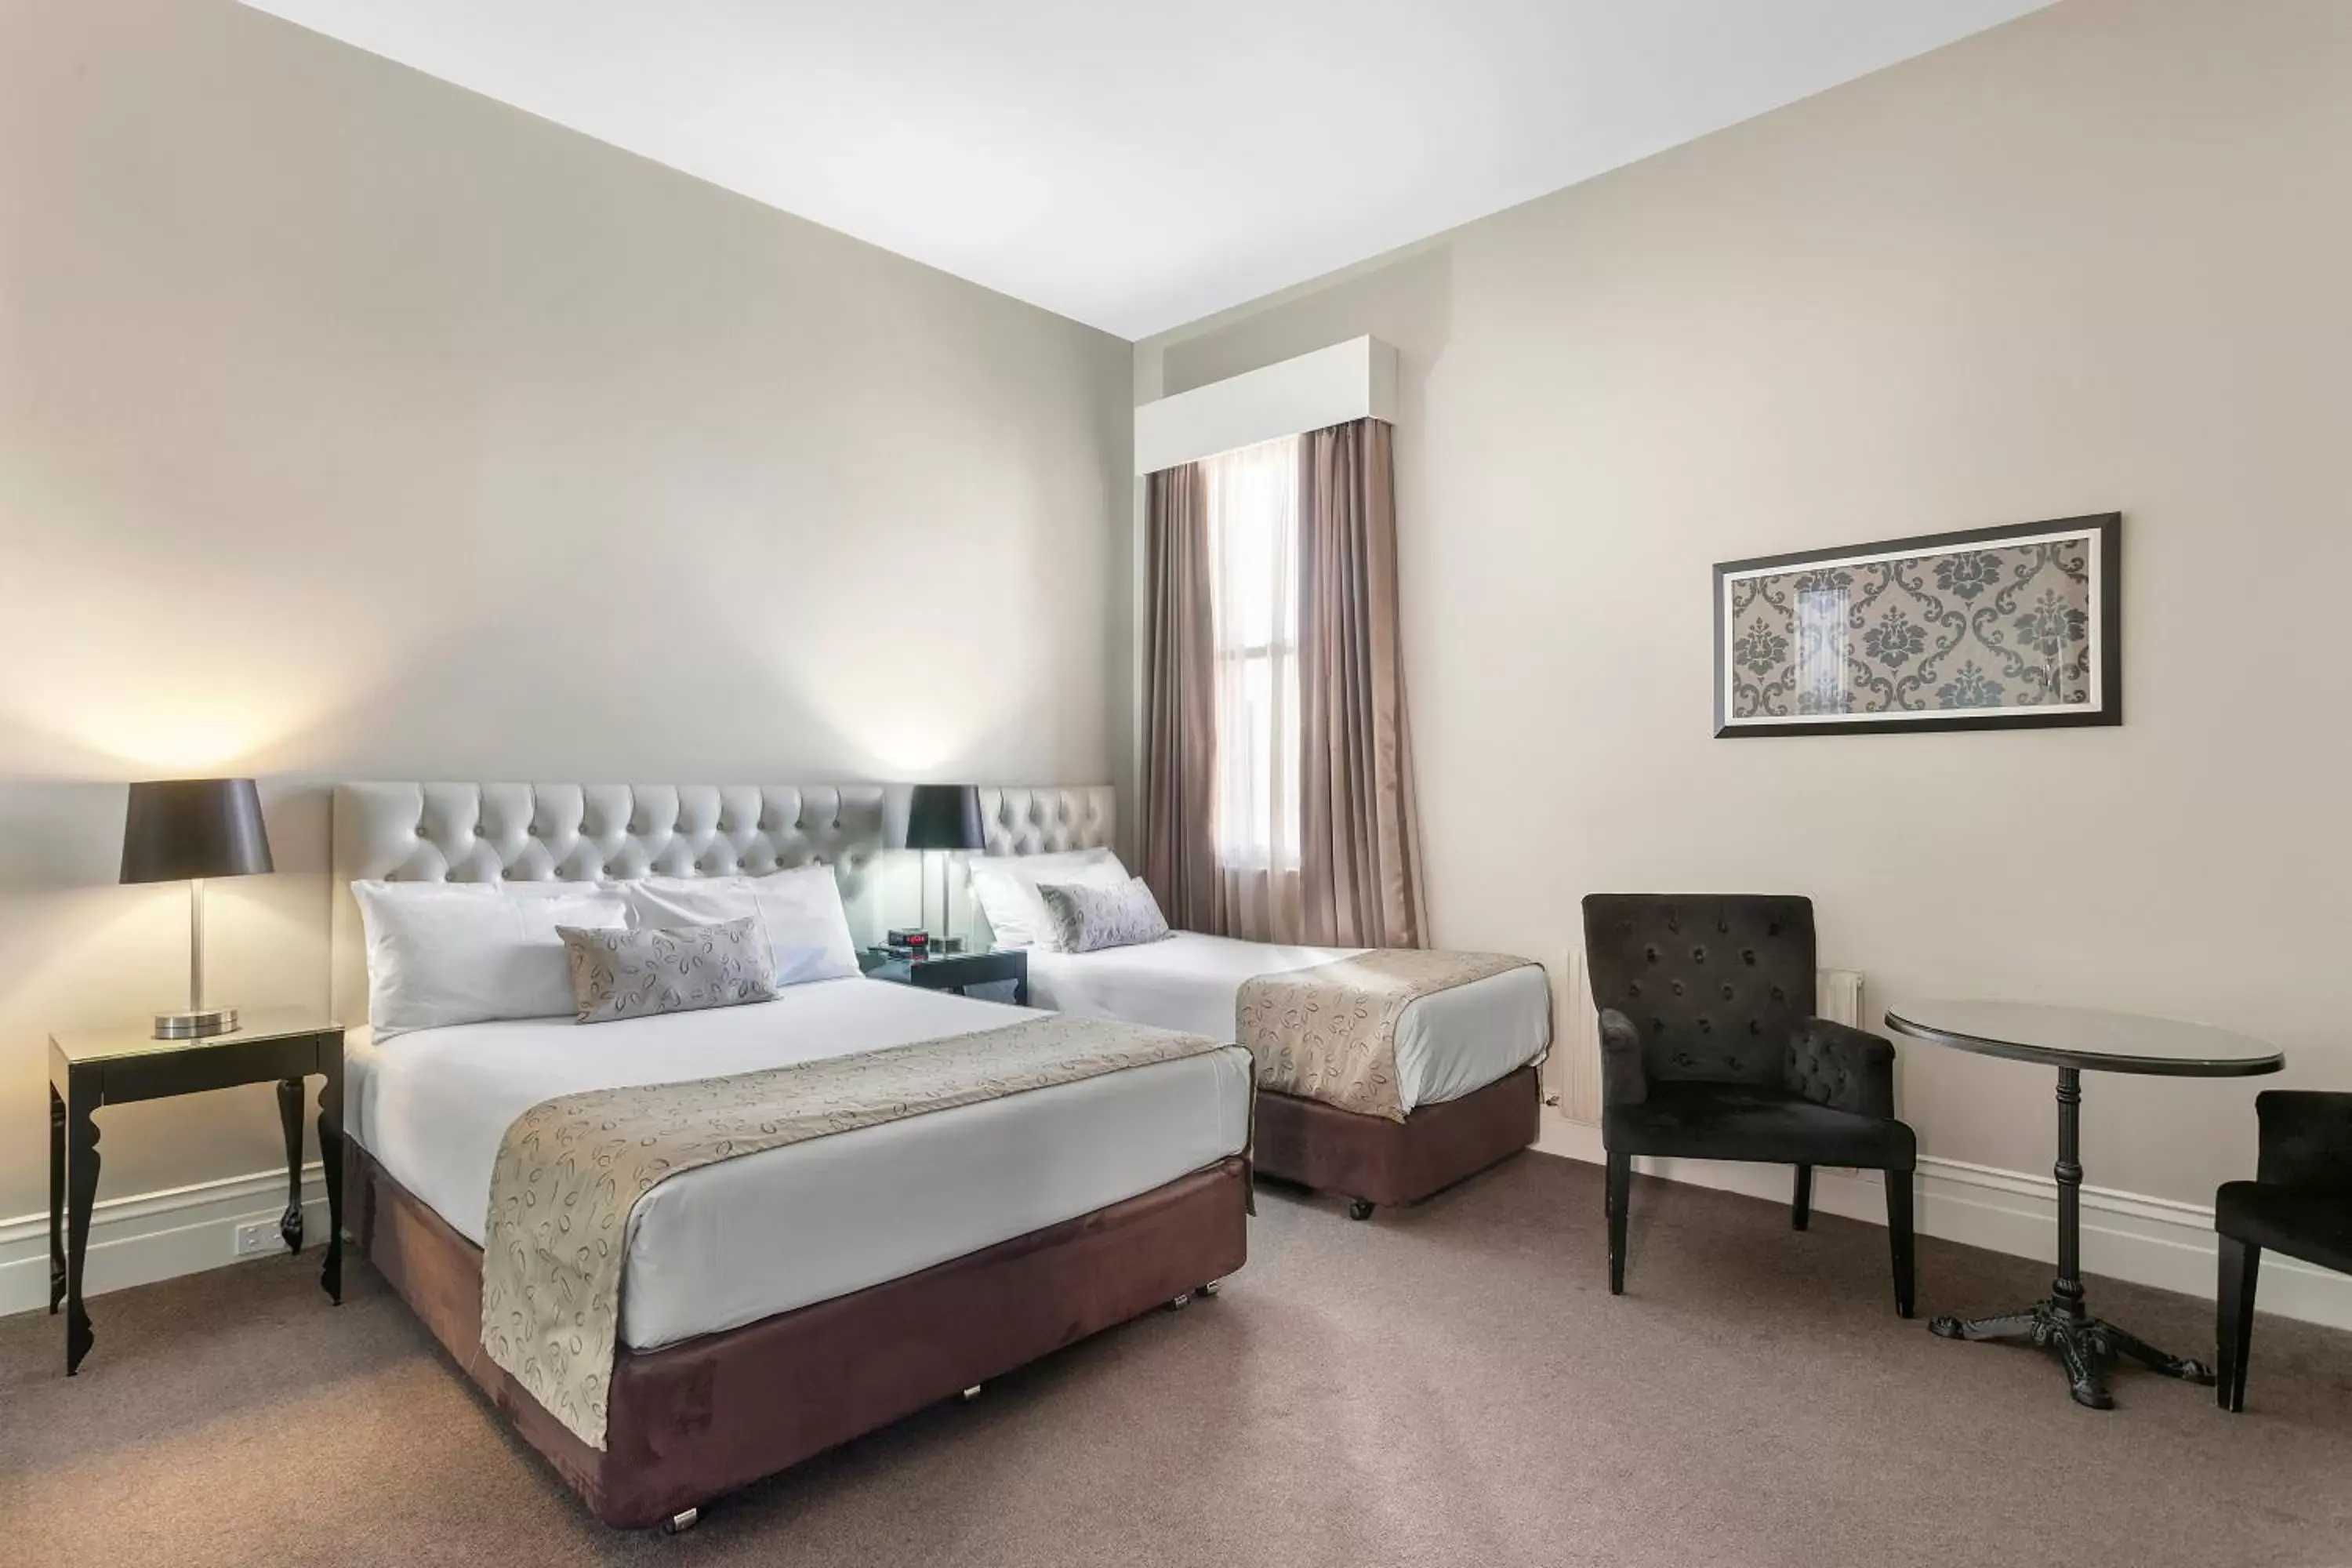 Standard Queen Room in Quality Inn The George Hotel Ballarat